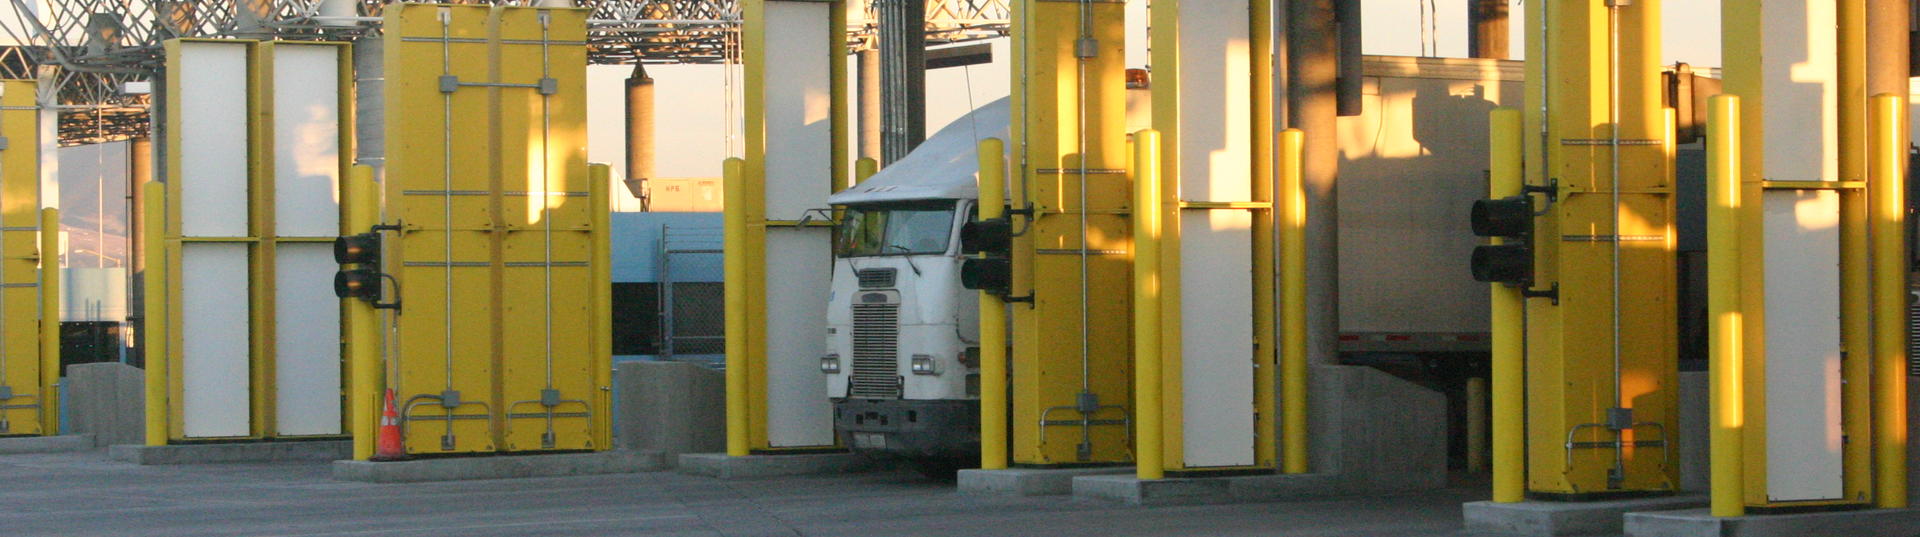 trucks driving through security sensors